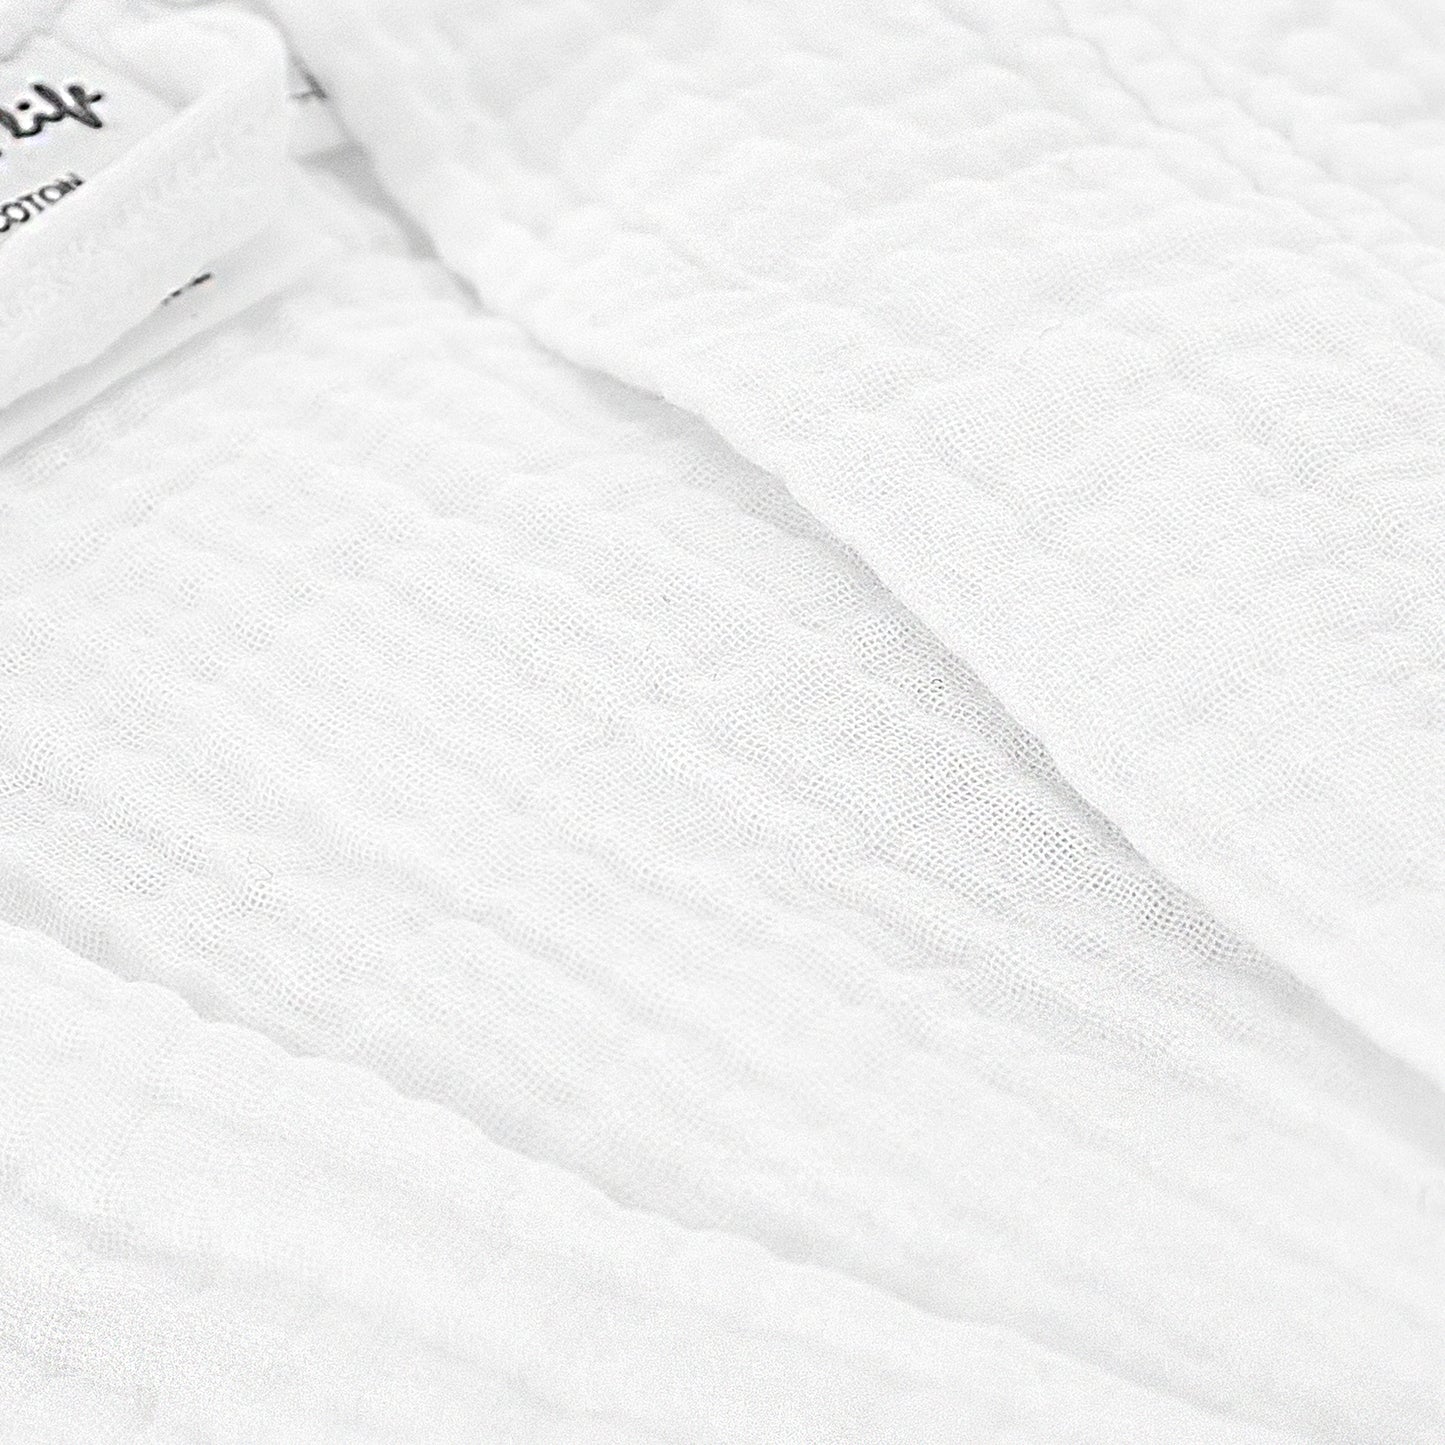 Muslin Unisex Bathrobe,Turkish 100% Cotton,Soft, Absorbent, Natural Garment Wash